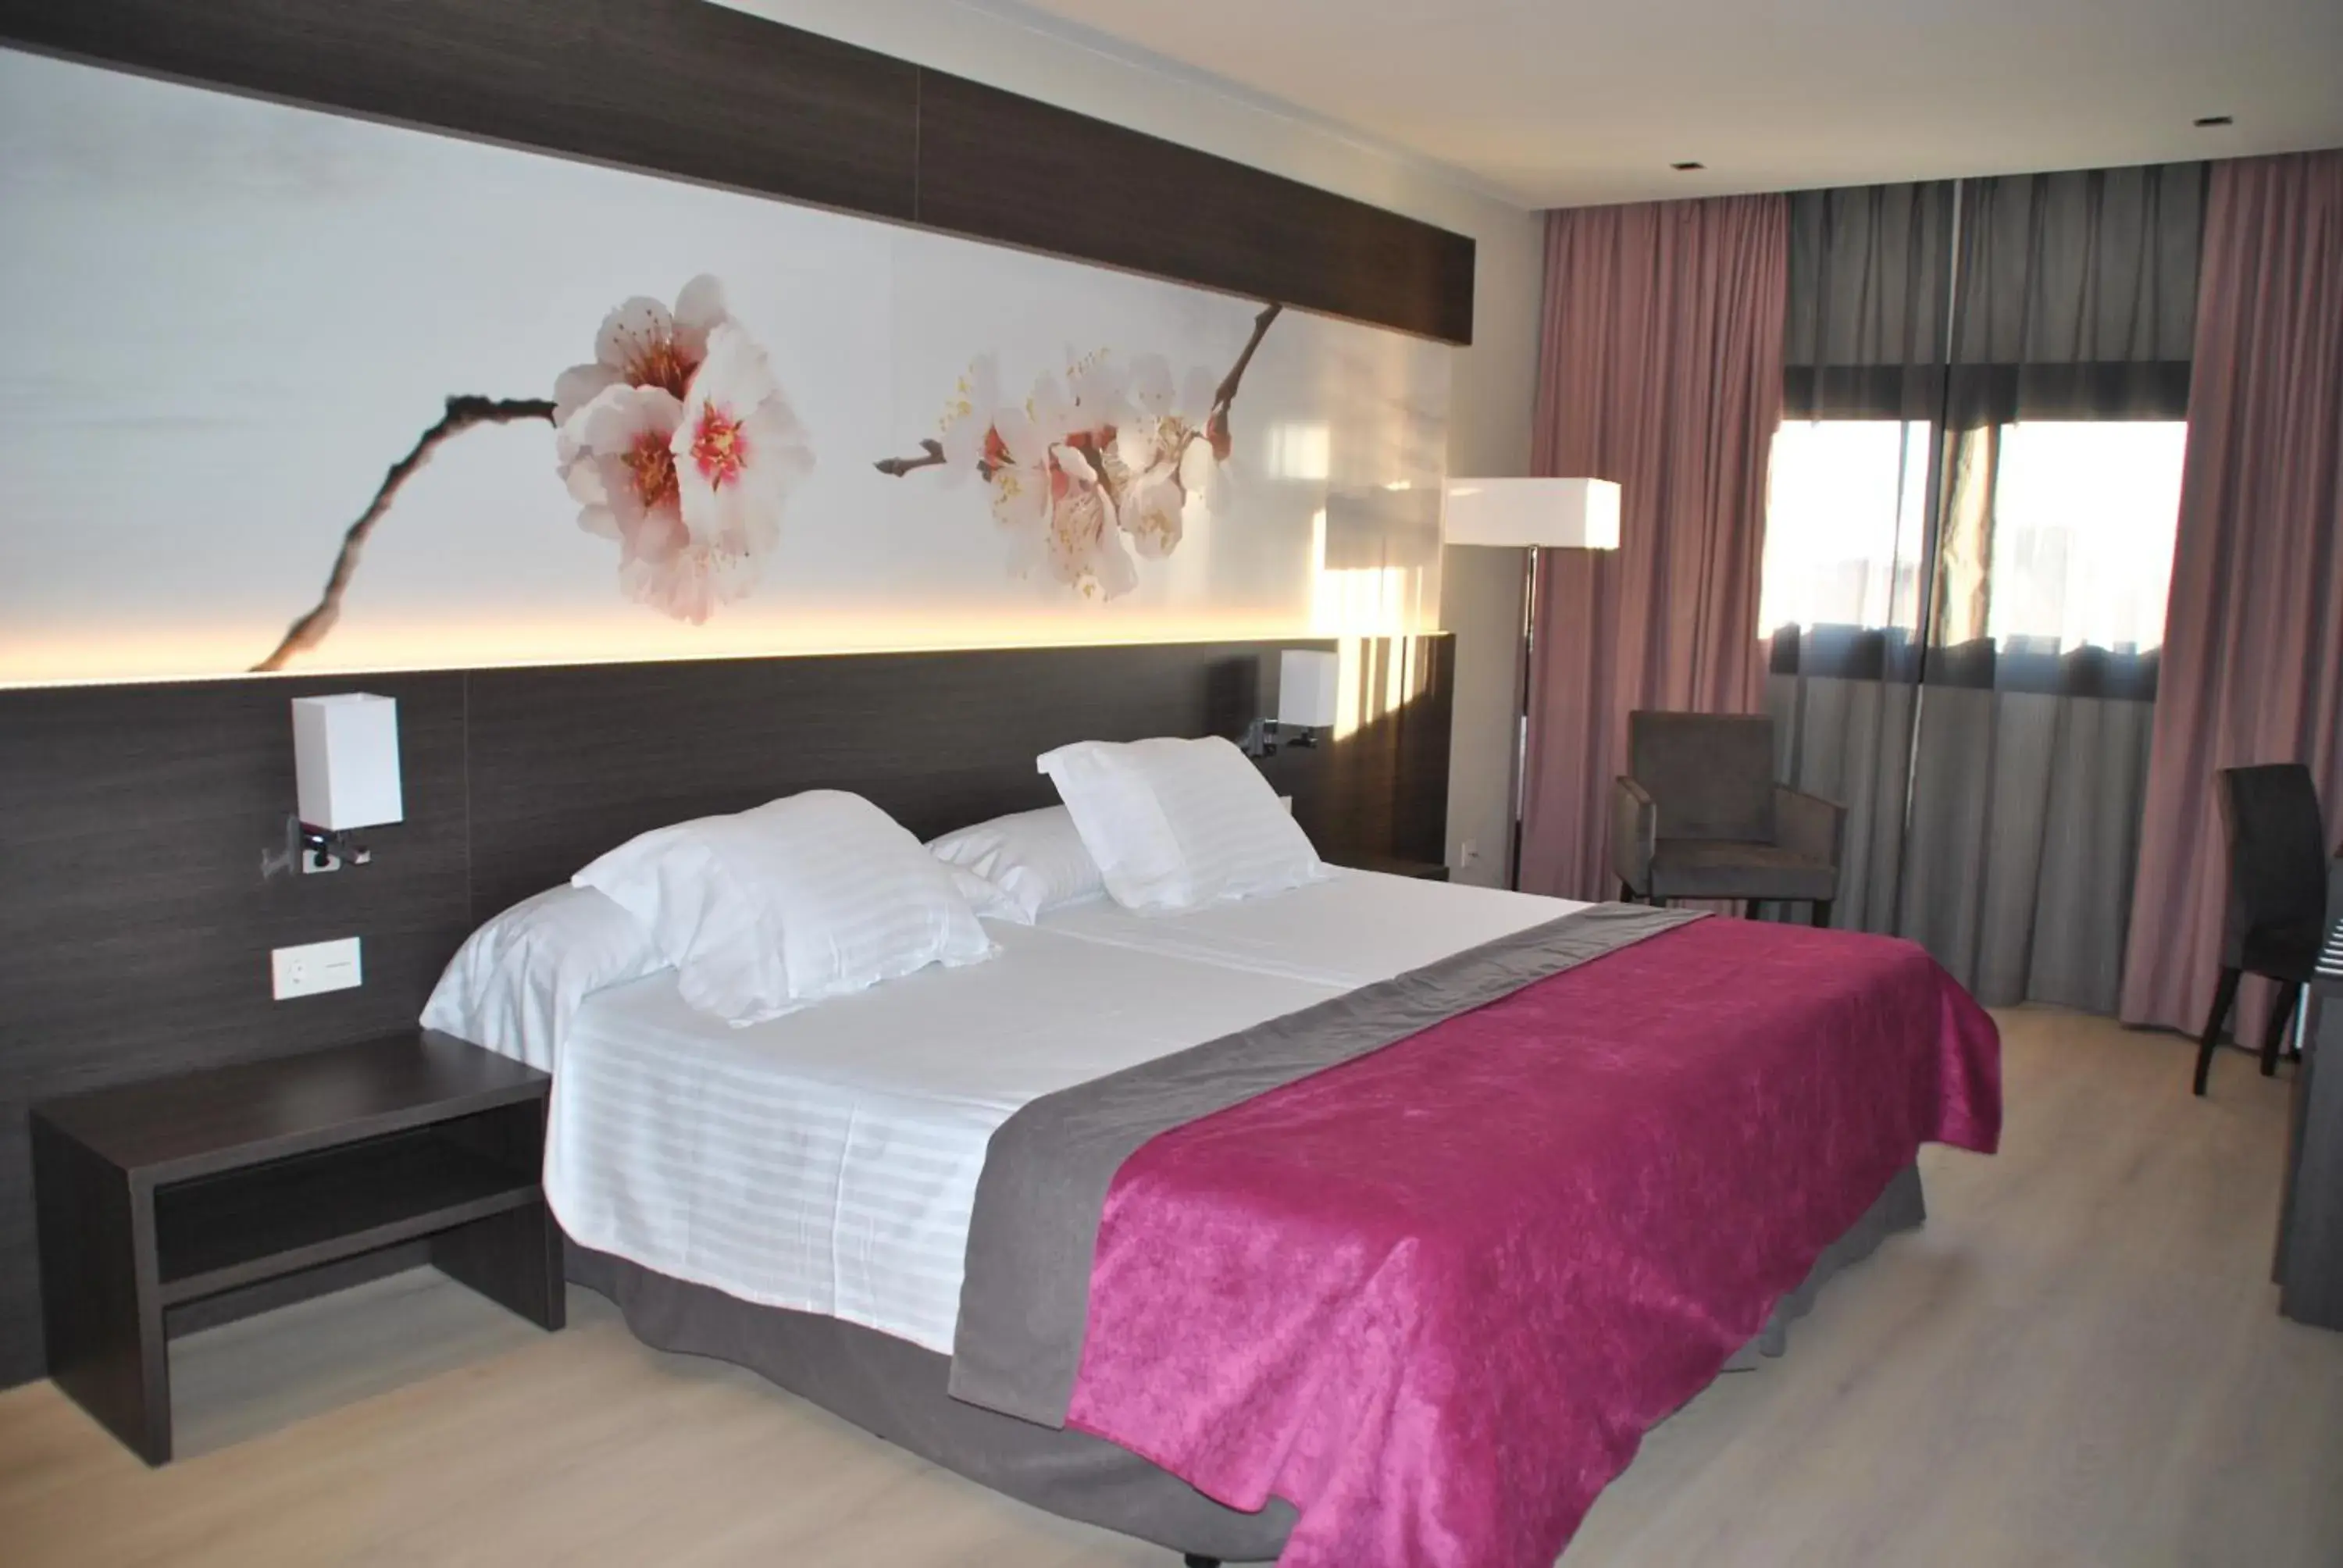 Bedroom, Bed in Brea's Hotel